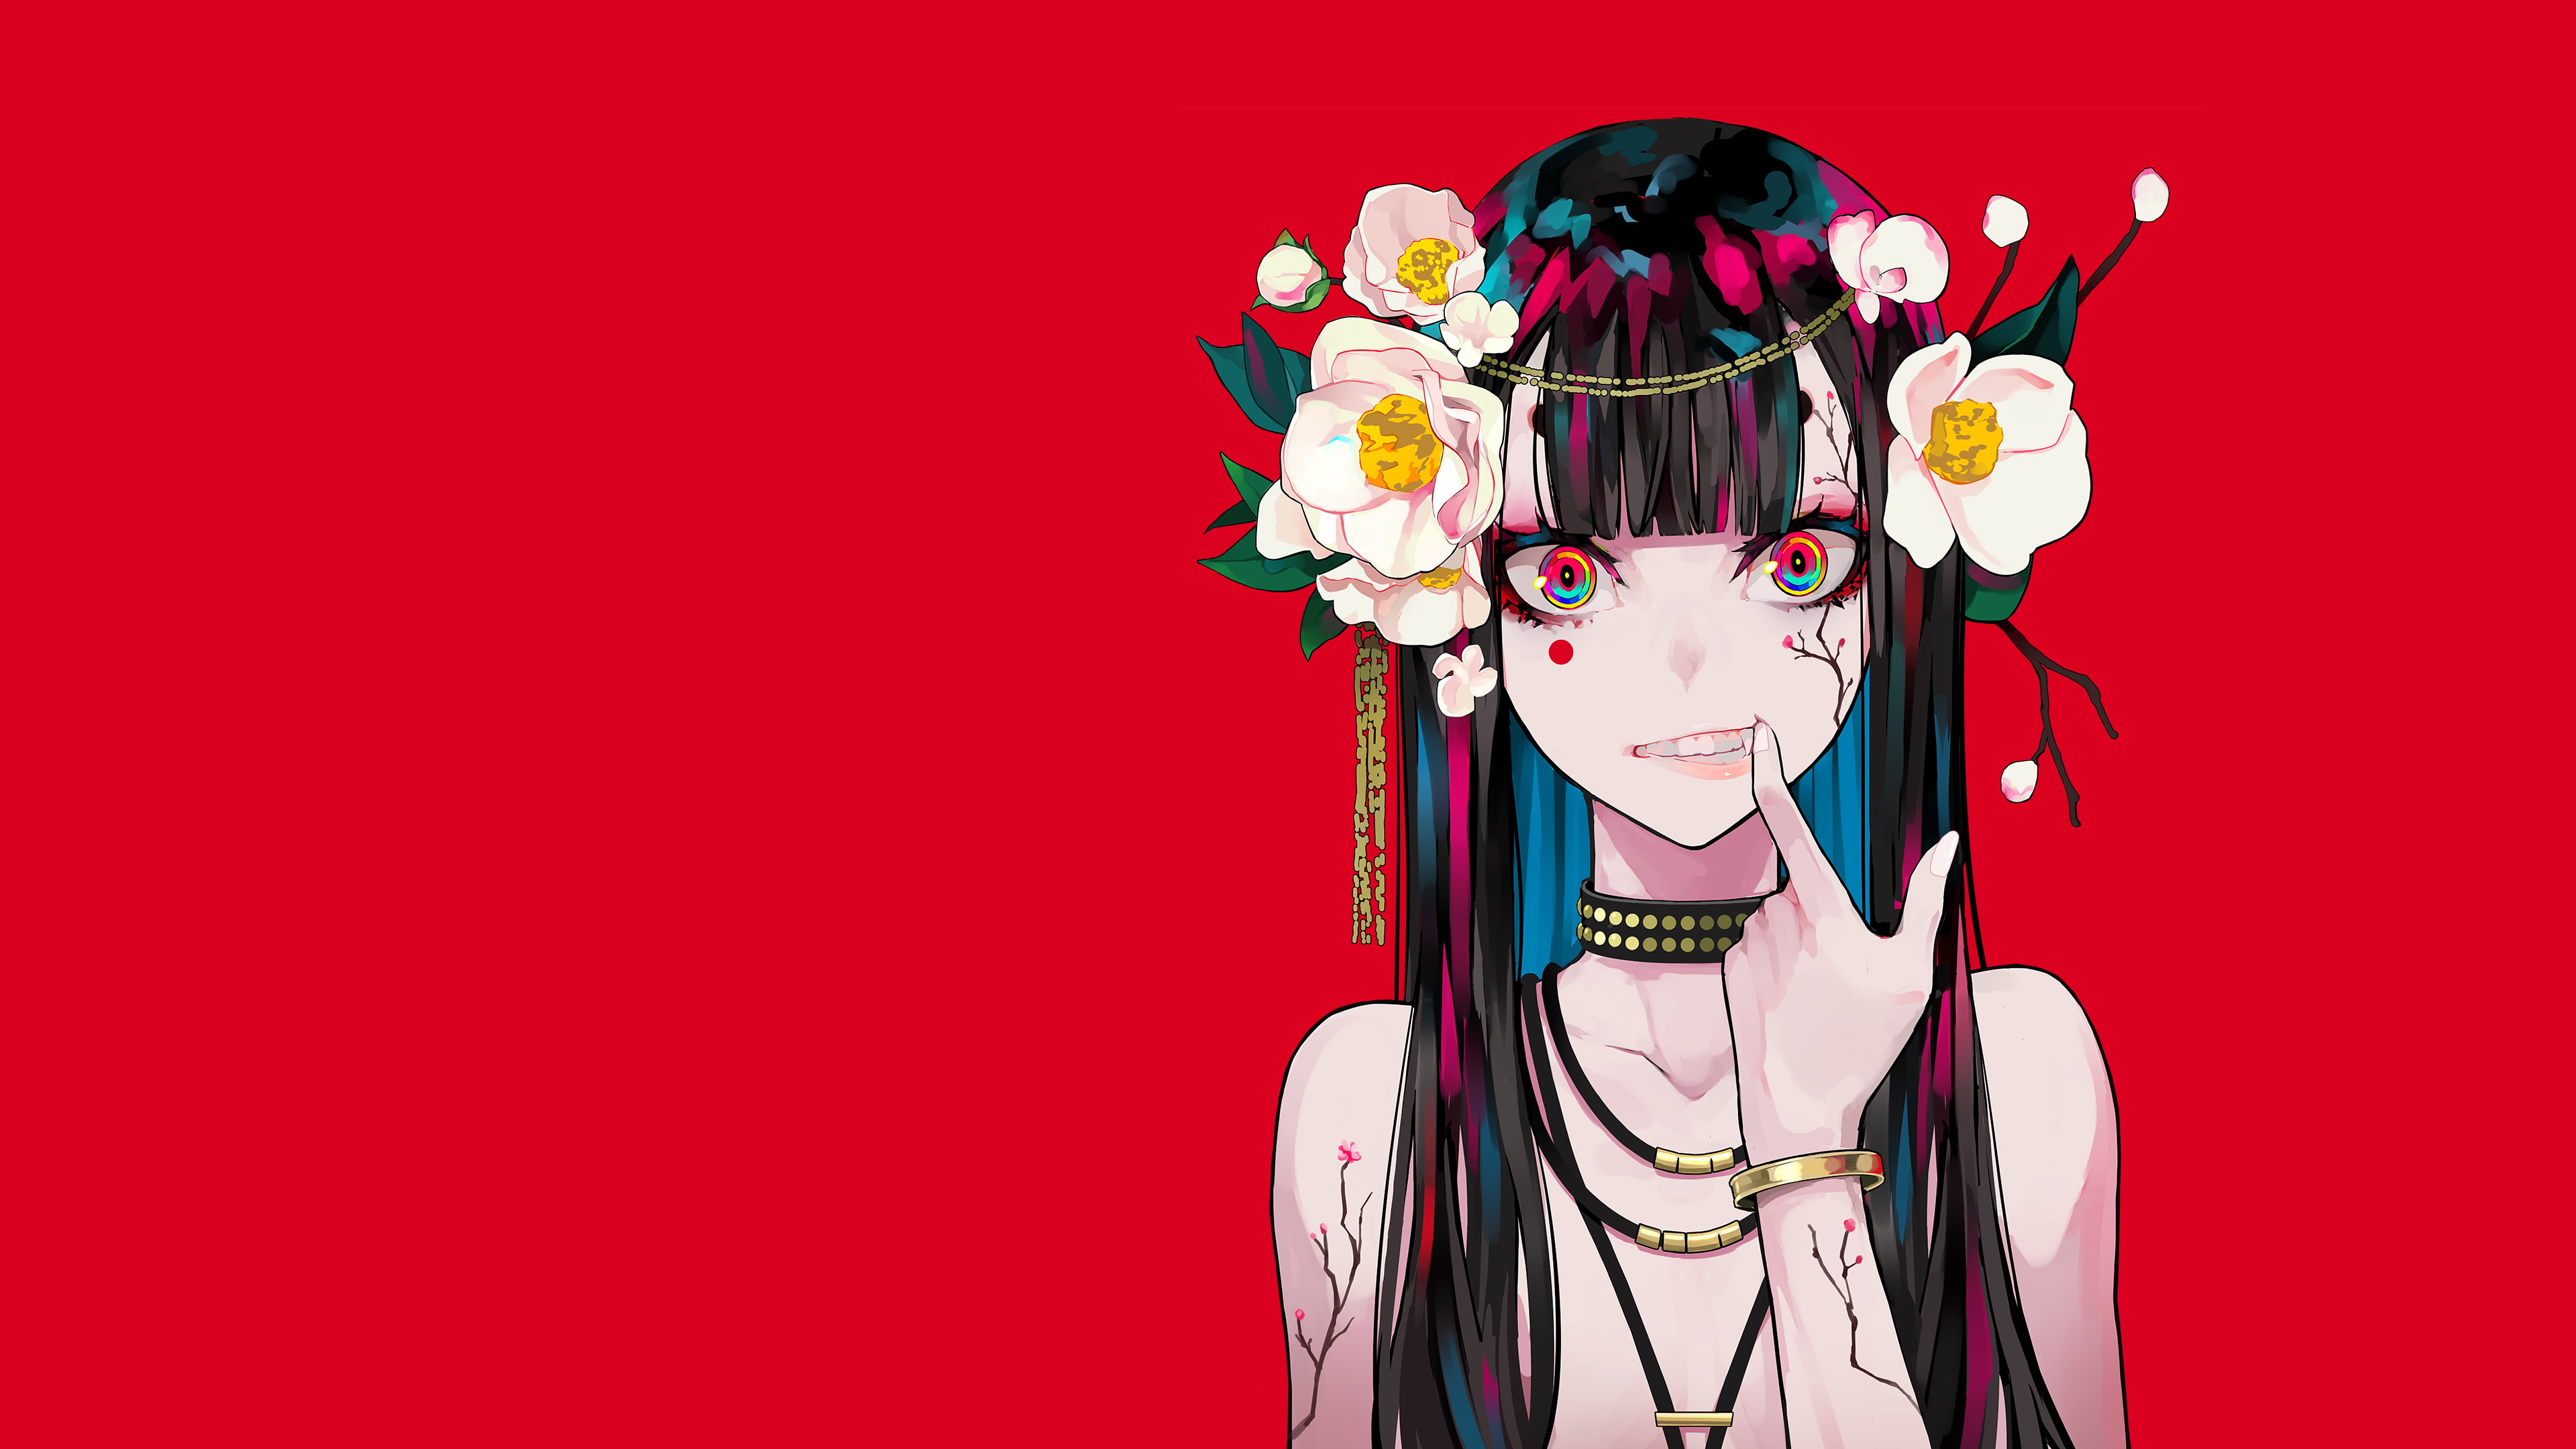 artwork, minimalism, anime girls, flower in hair, red background